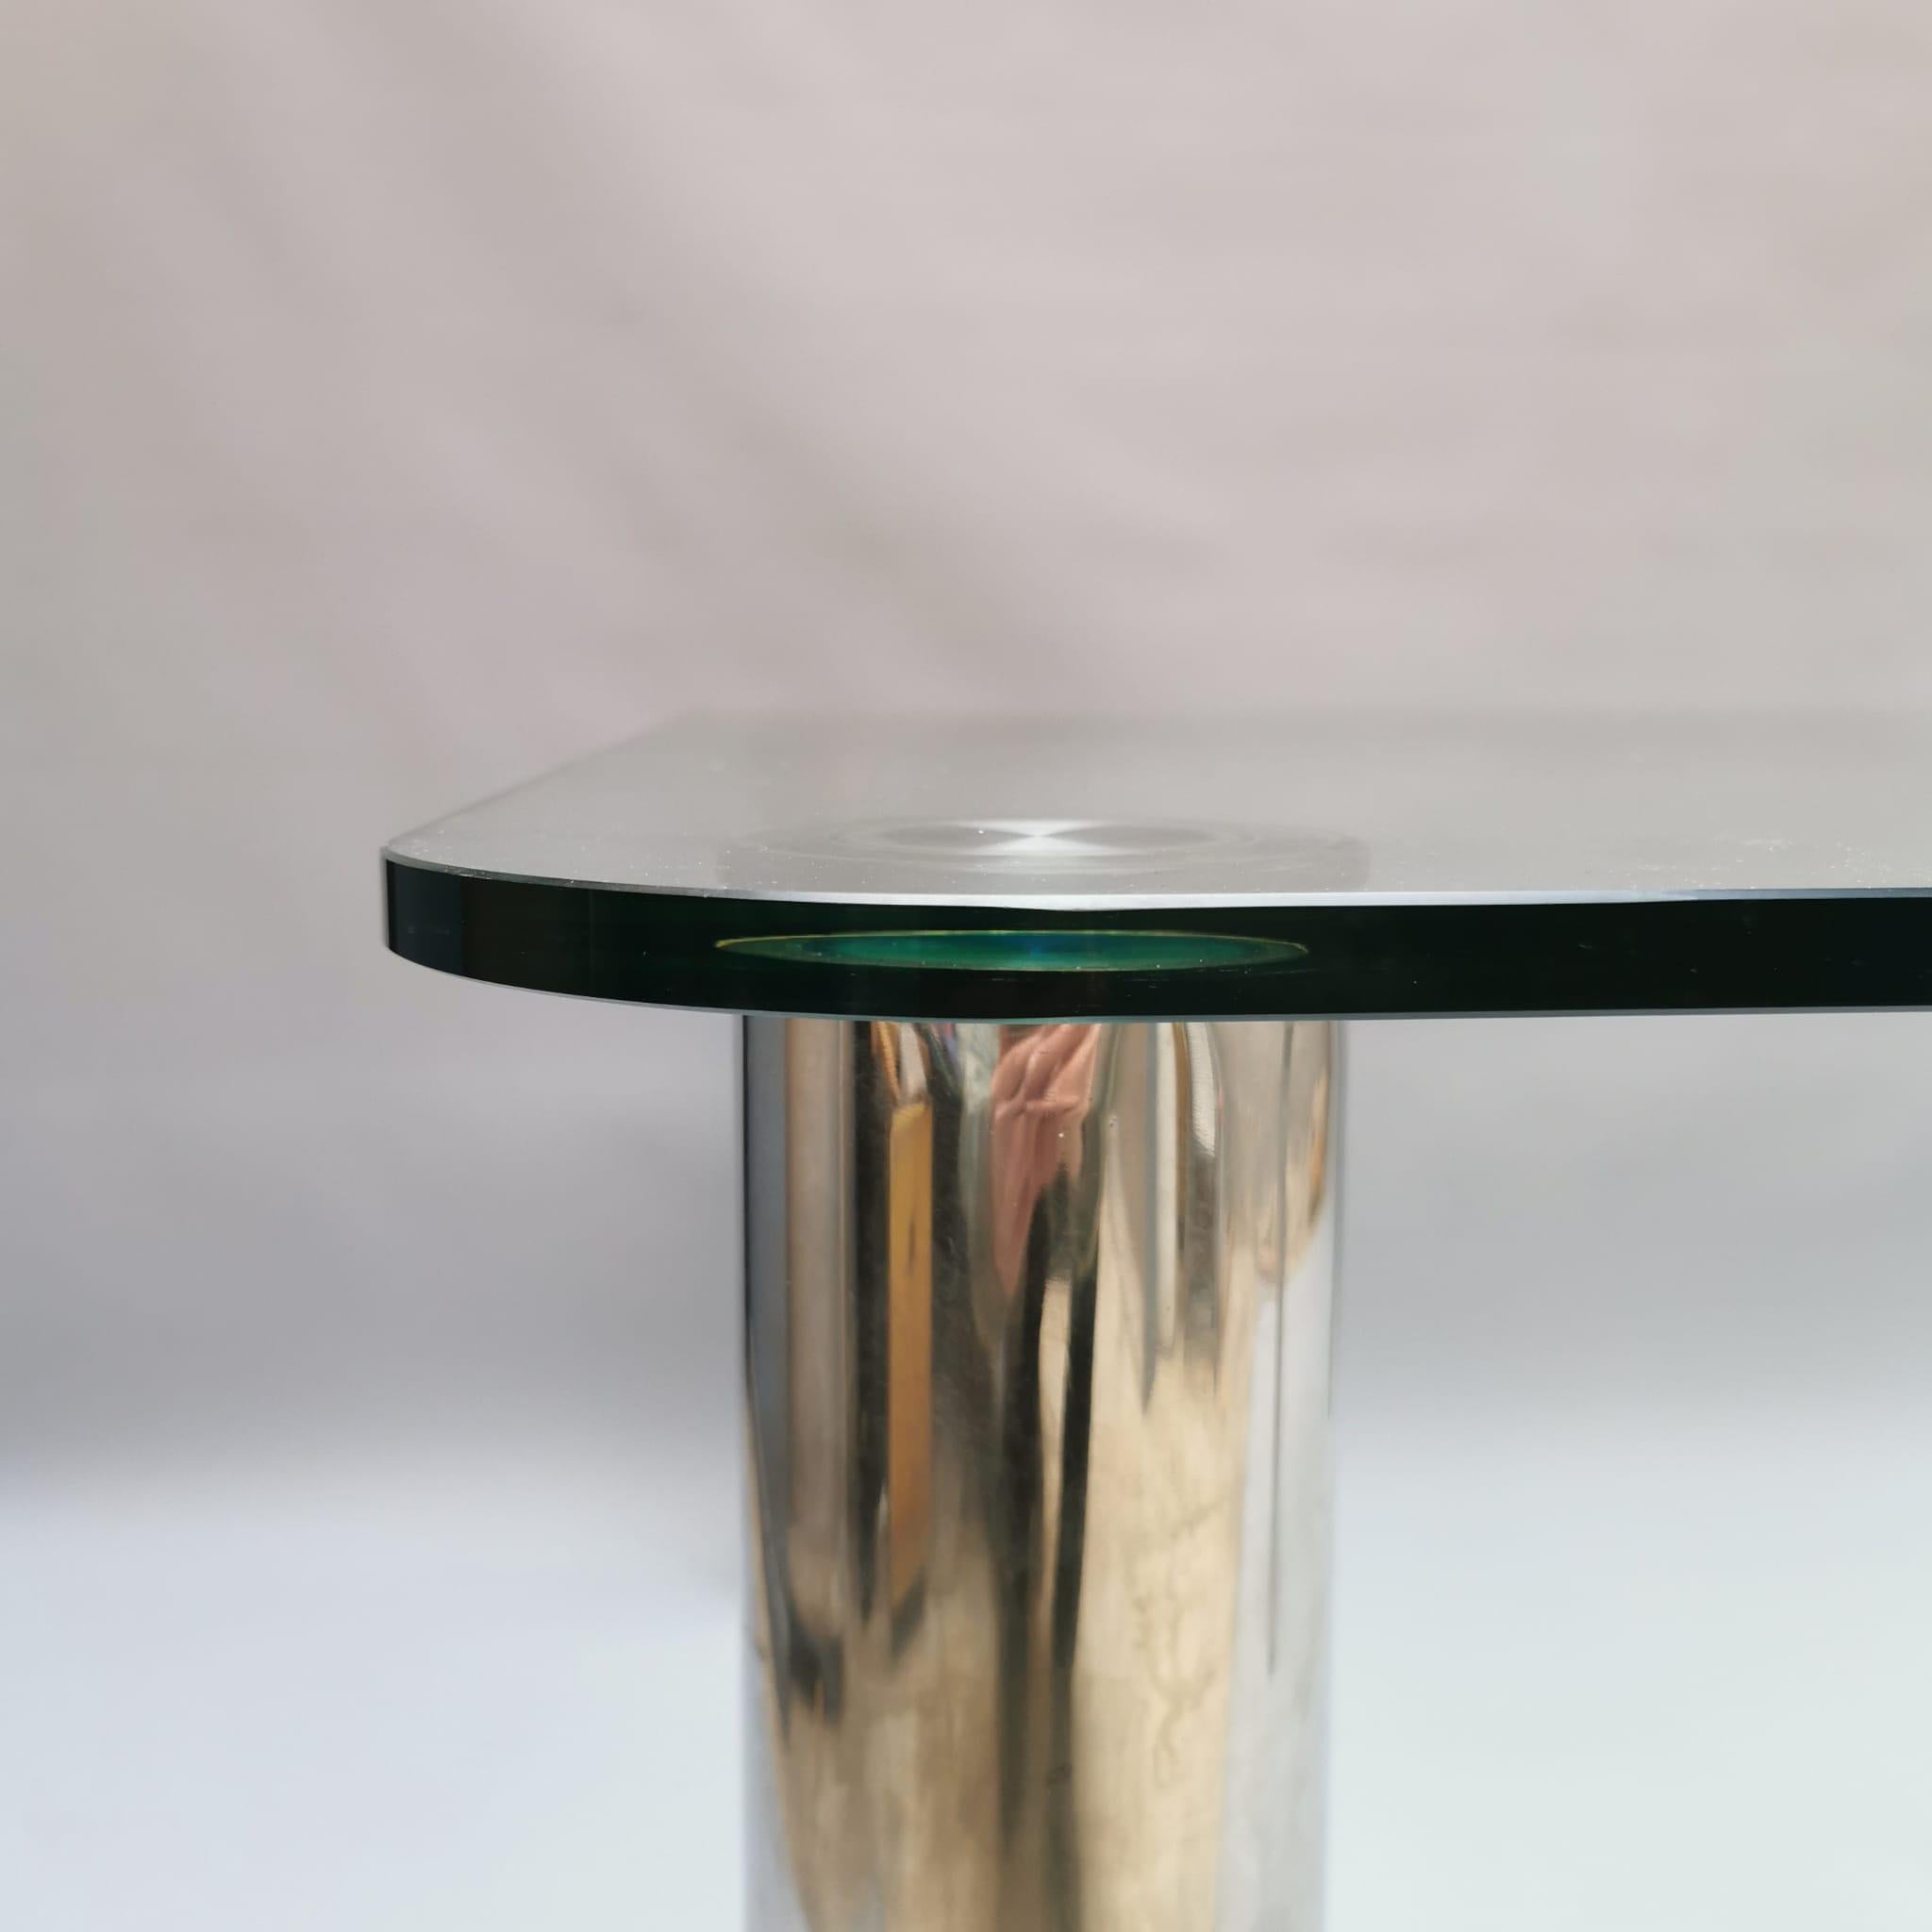 Marcuso table by Marzo Zanuso for Zanotta 2